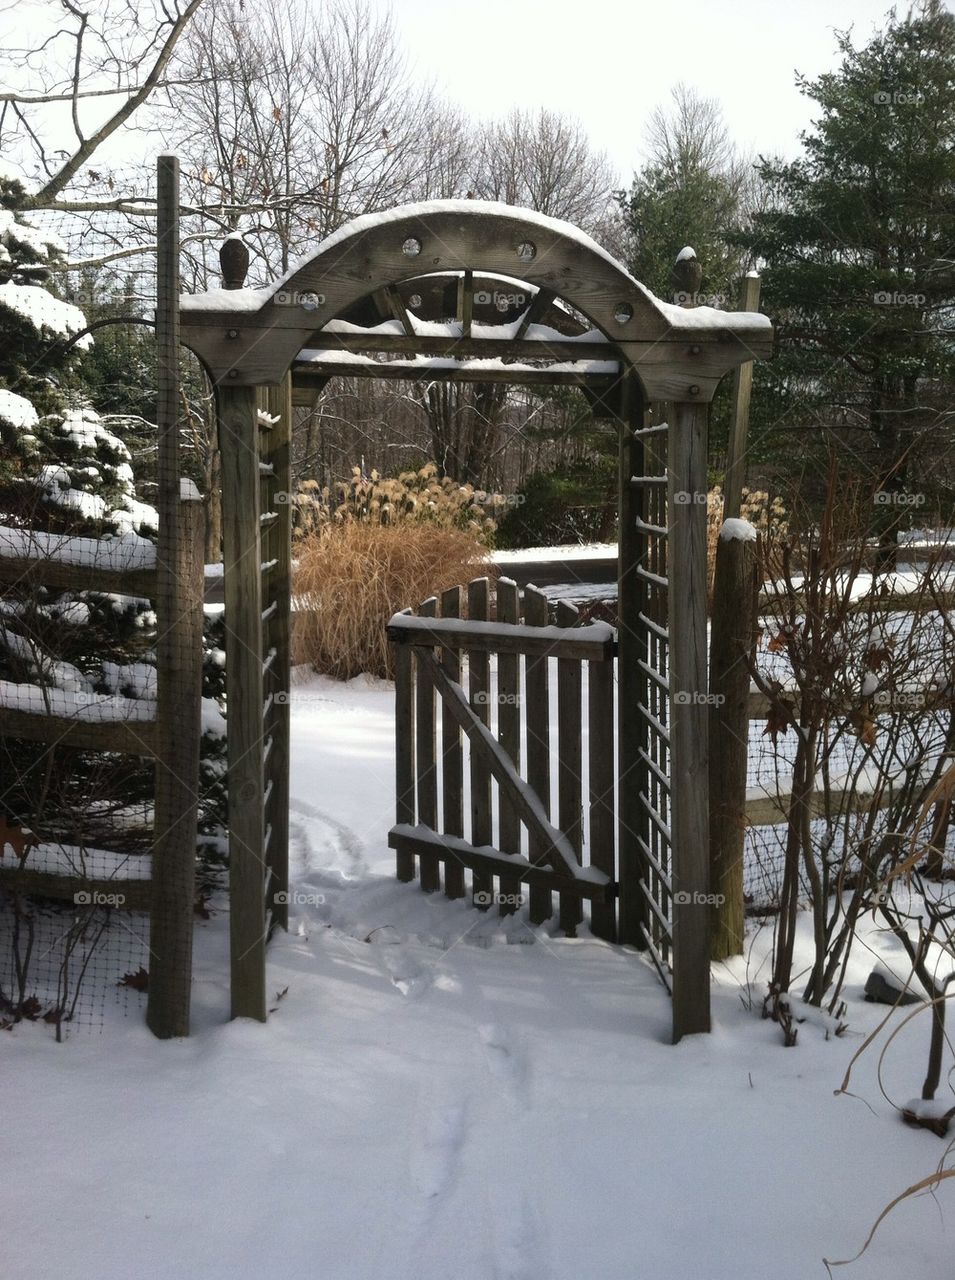 The opened garden gate